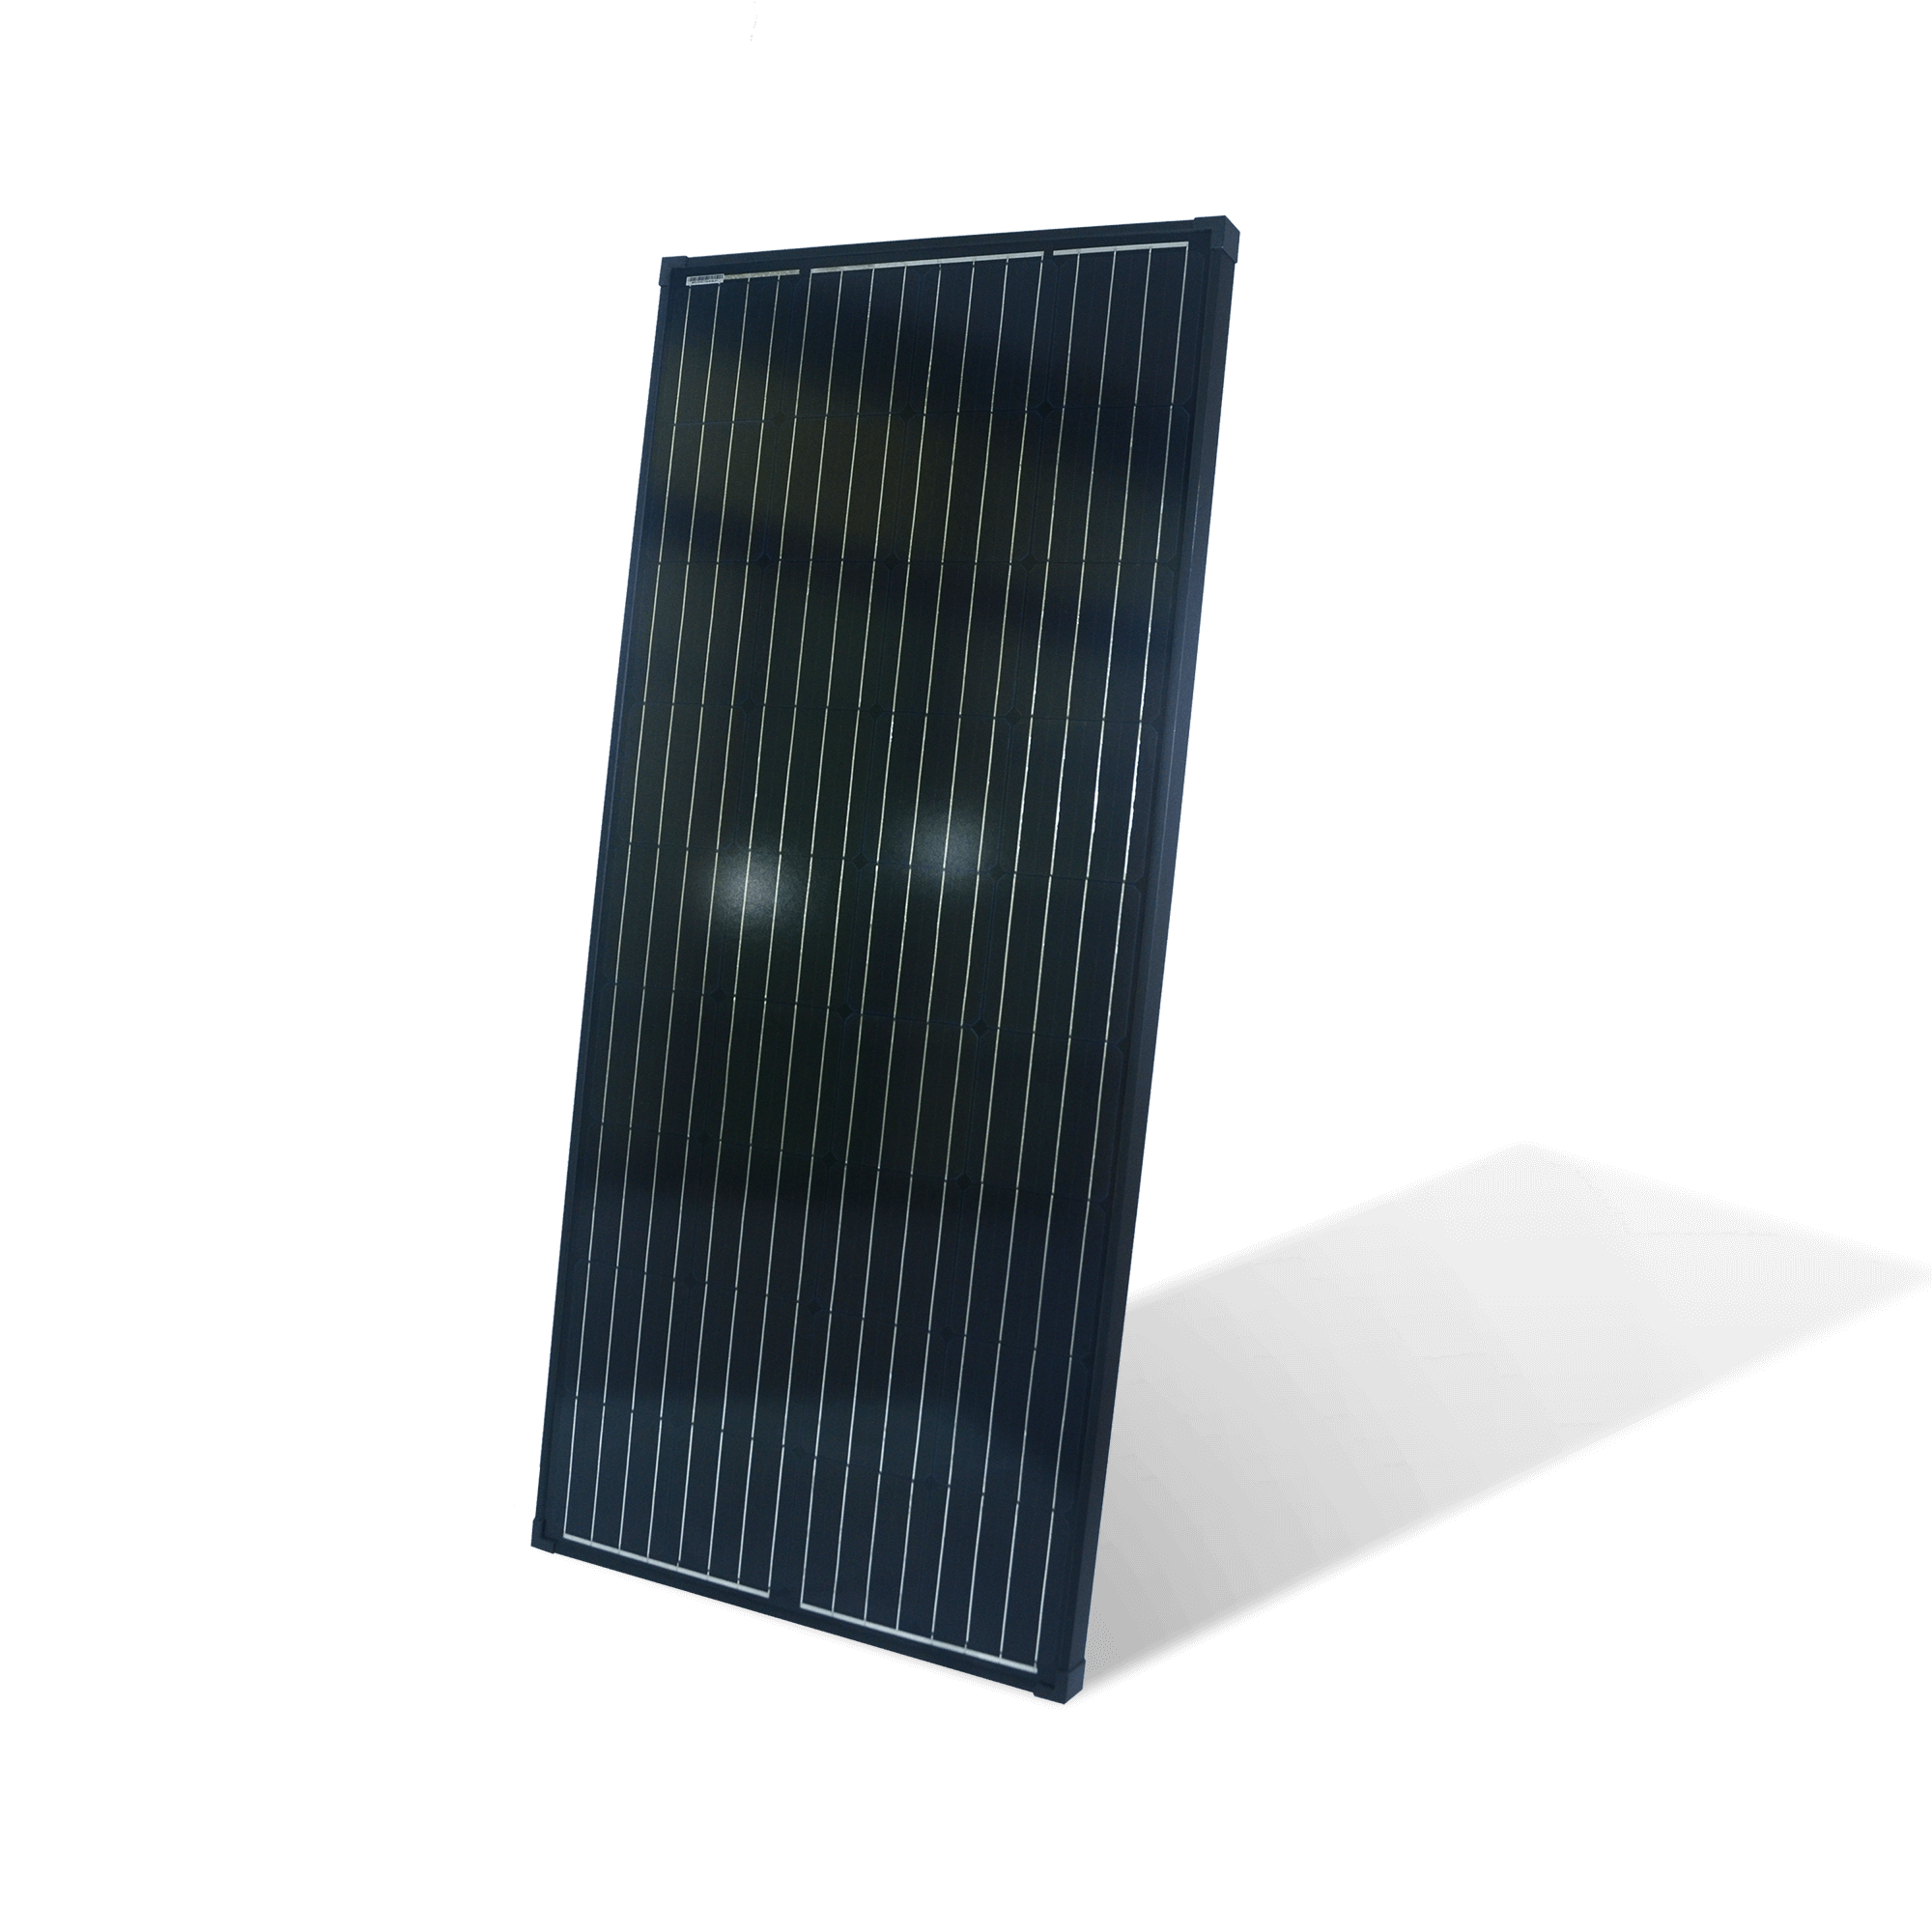 Nature Power 200W Monocrystalline Solar Panel